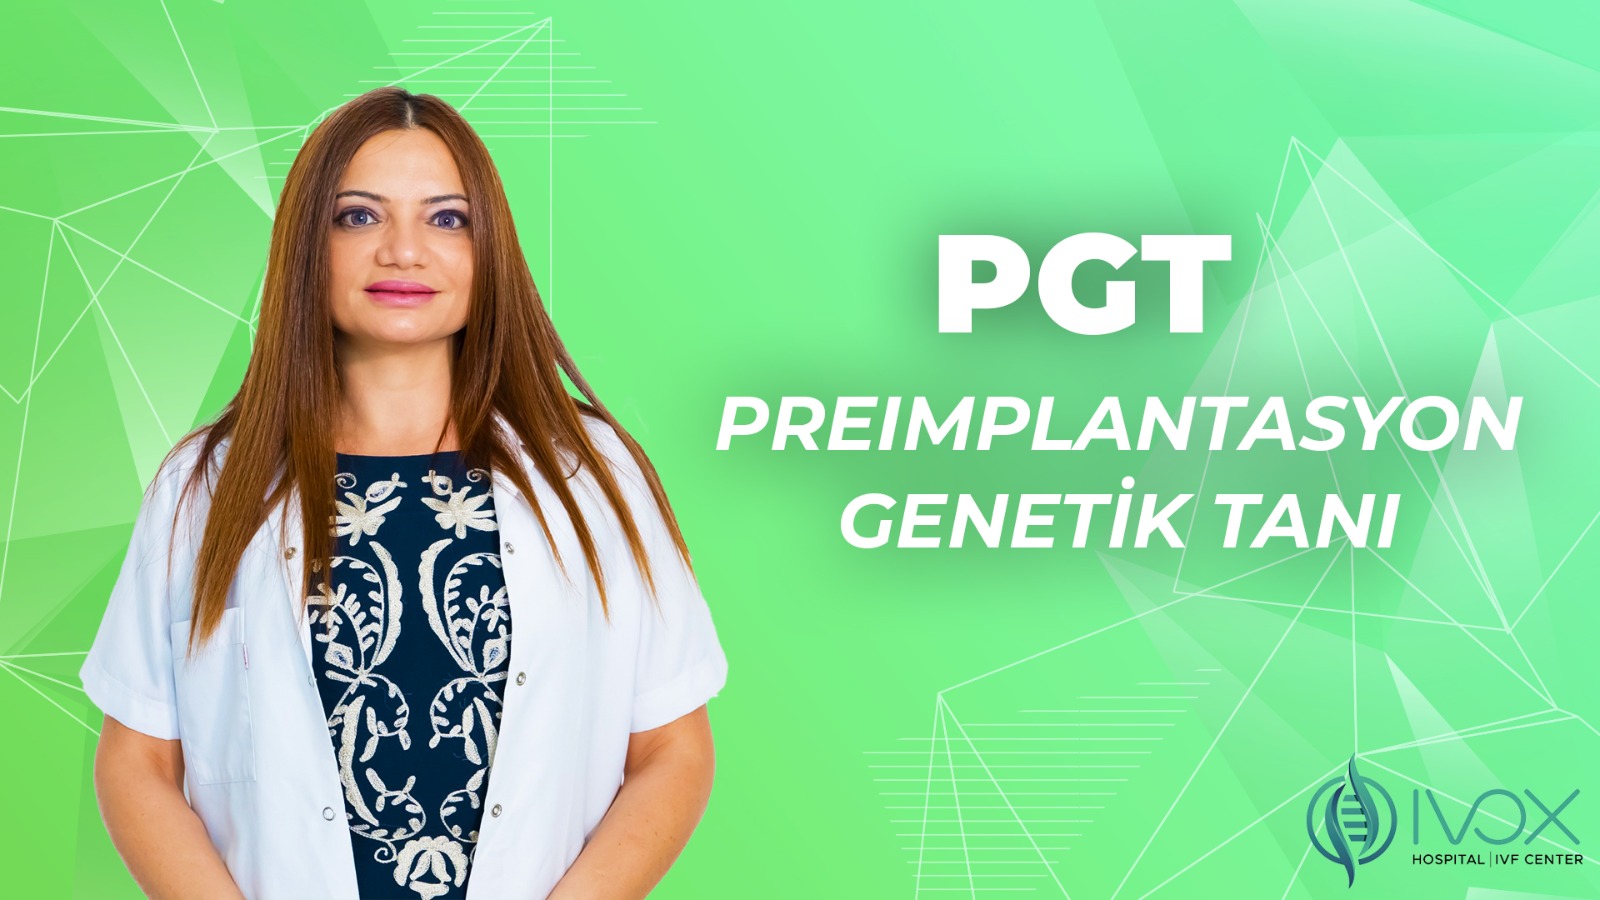 PGT Preimplantasyon genetik tanı